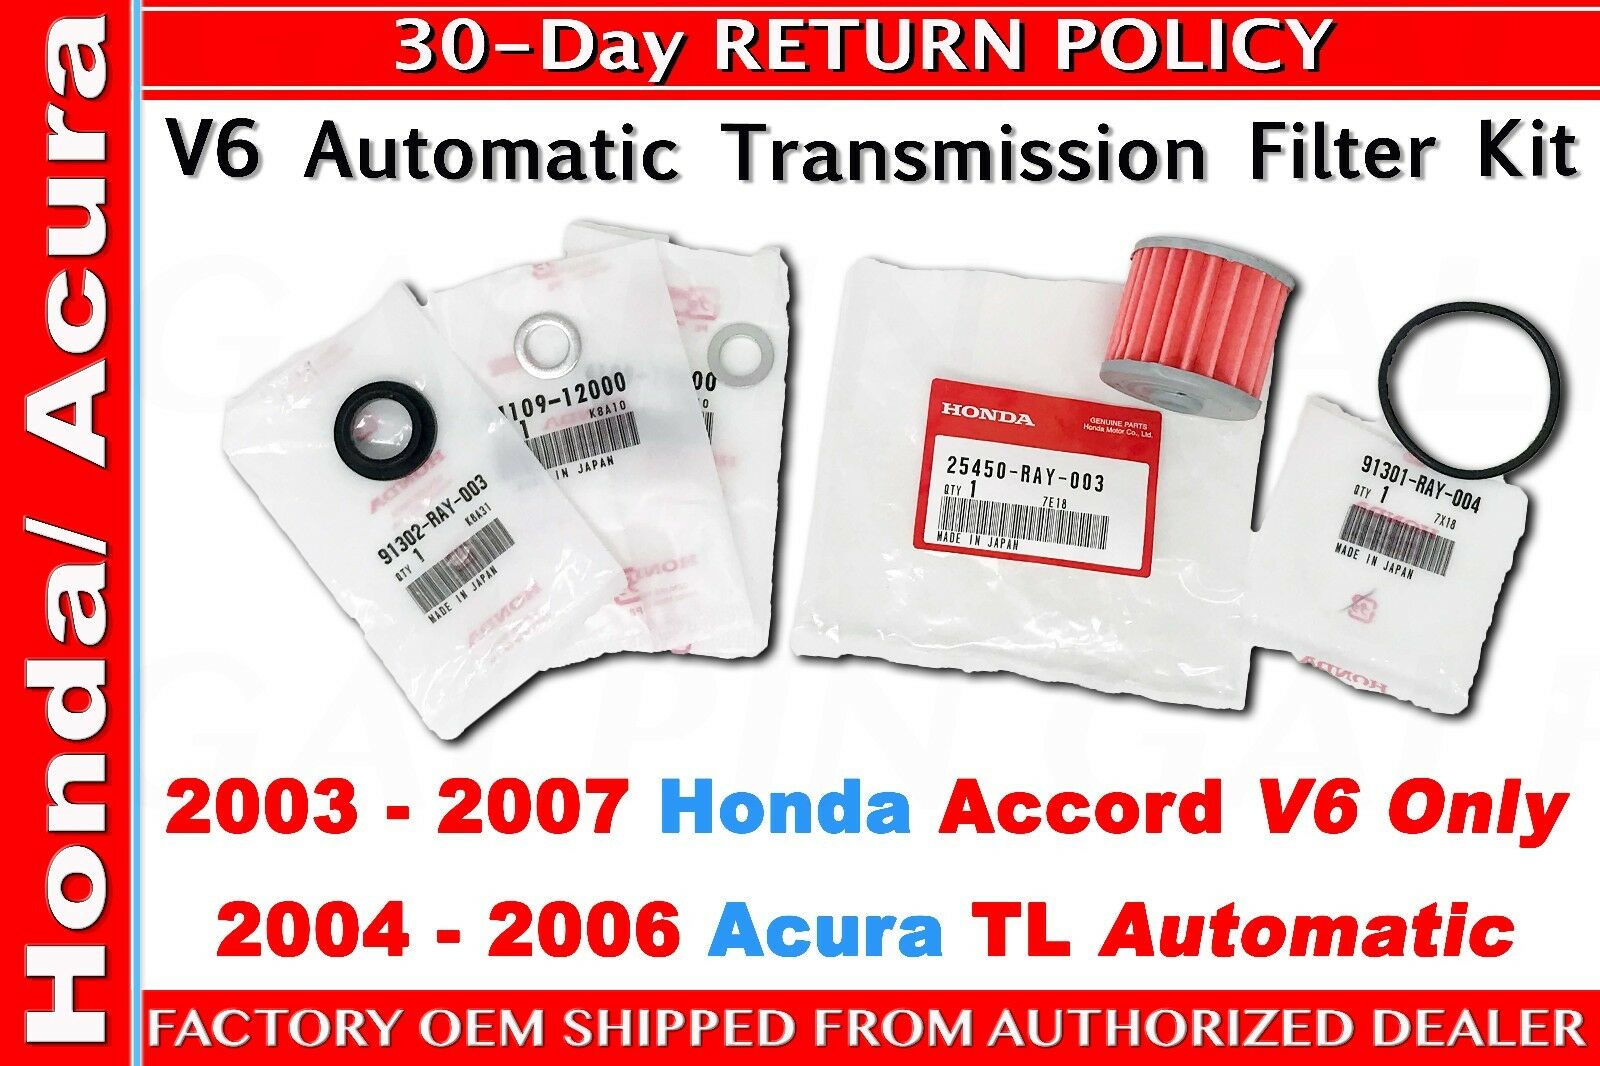 Genuine Oem Honda Accord Automatic Transmission Filter Atf Kit V6 2003 - 2007